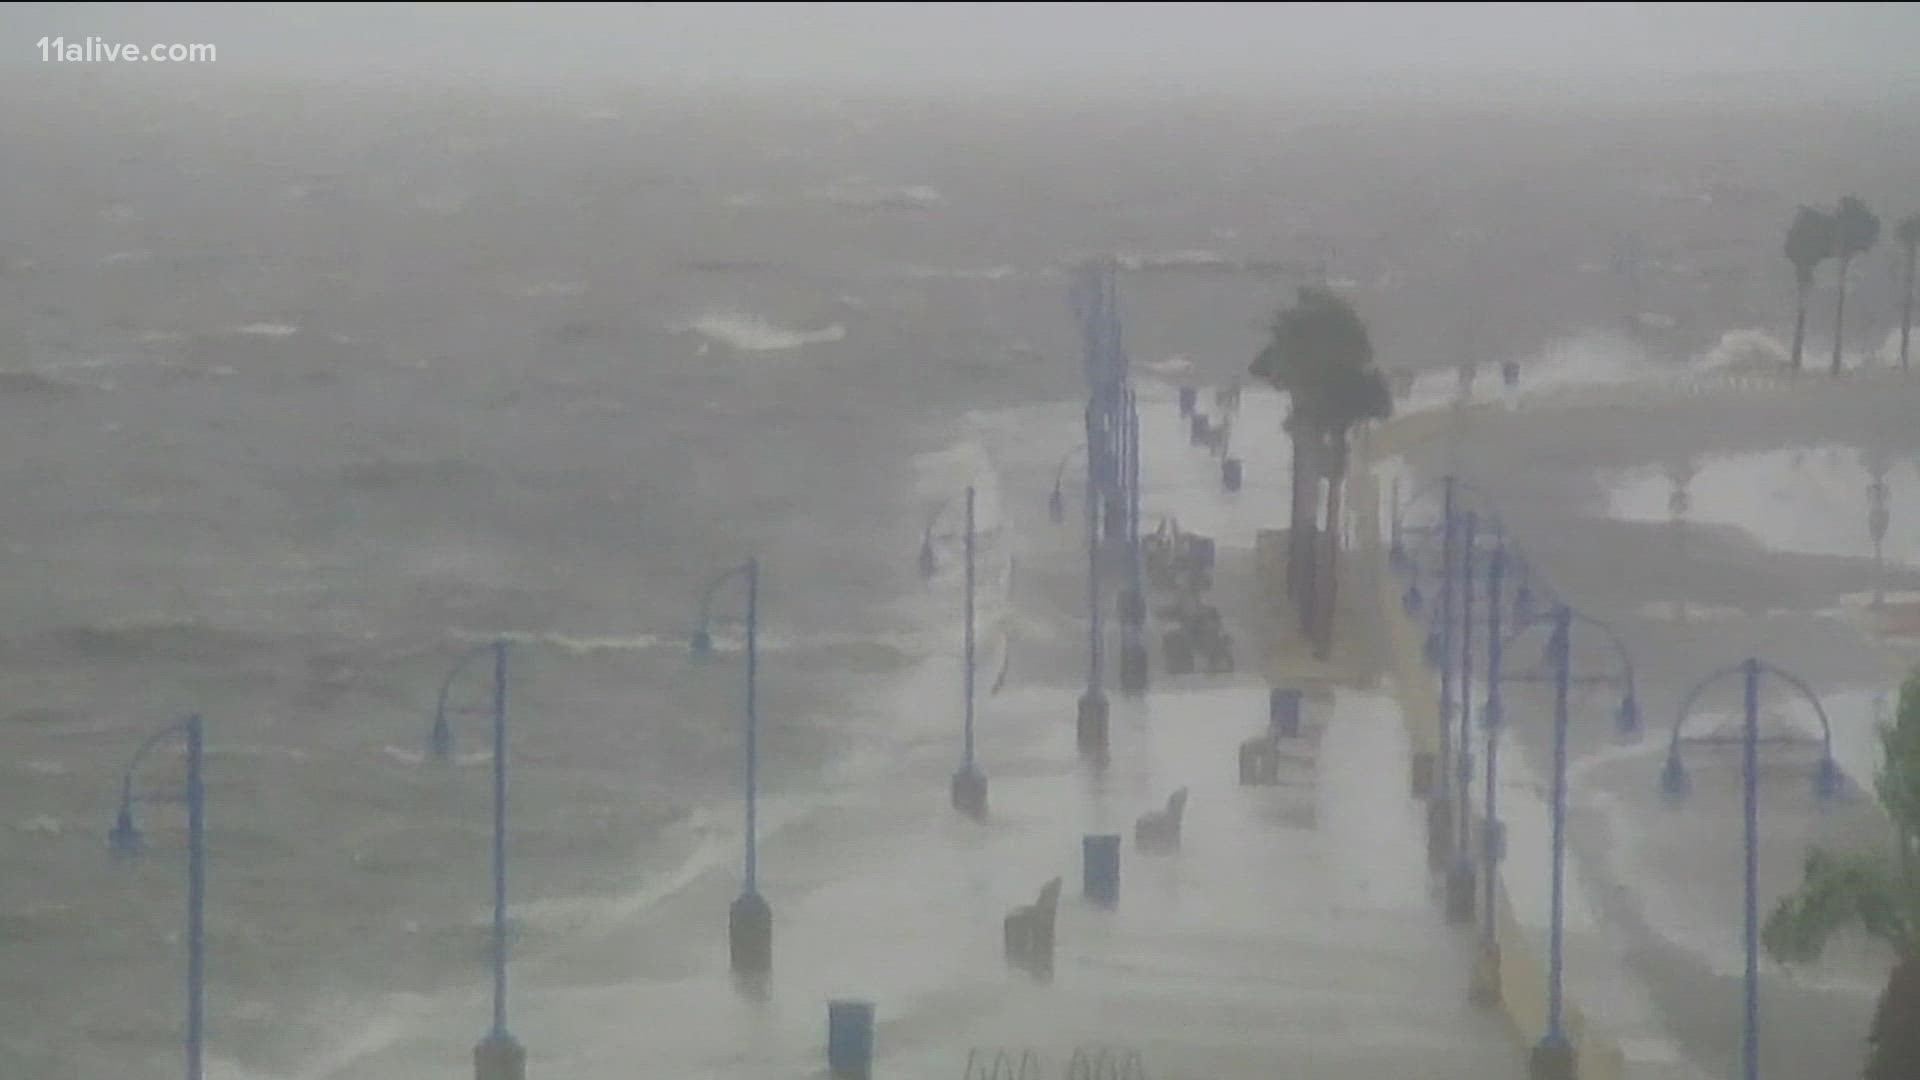 The storm is already beginning to produce effects along the Louisiana coast.